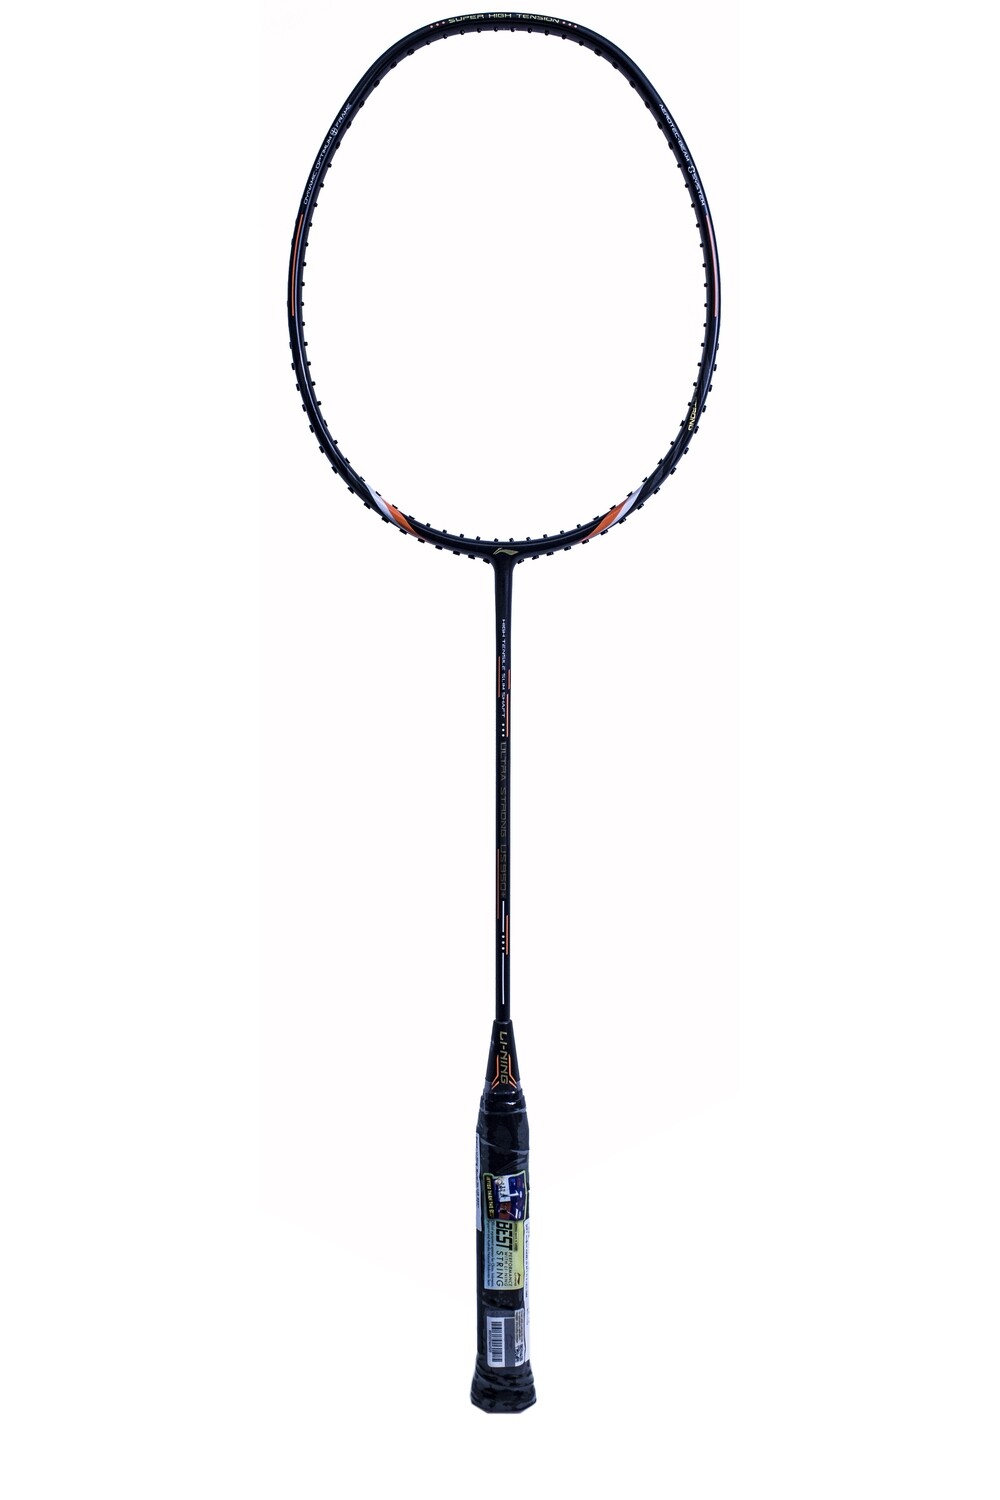 LI-NING Ultra Strong US 950+ Badminton Racquet -